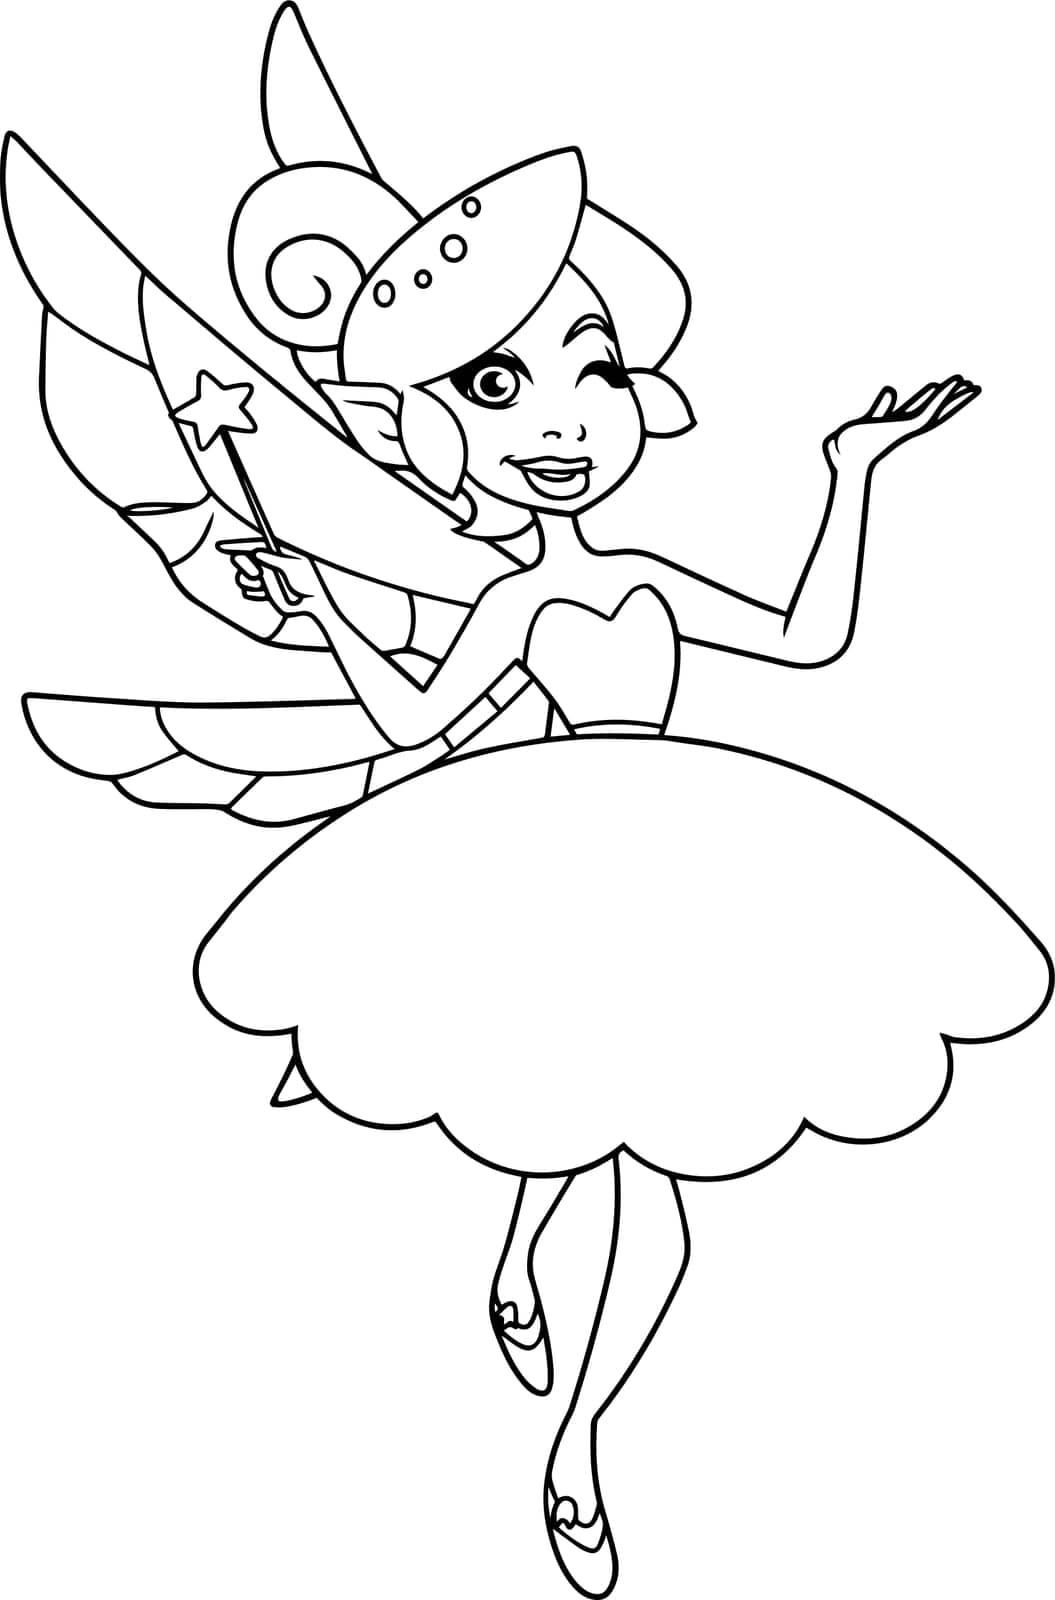 Line art illustration of happy cartoon fairy, flying on white background.